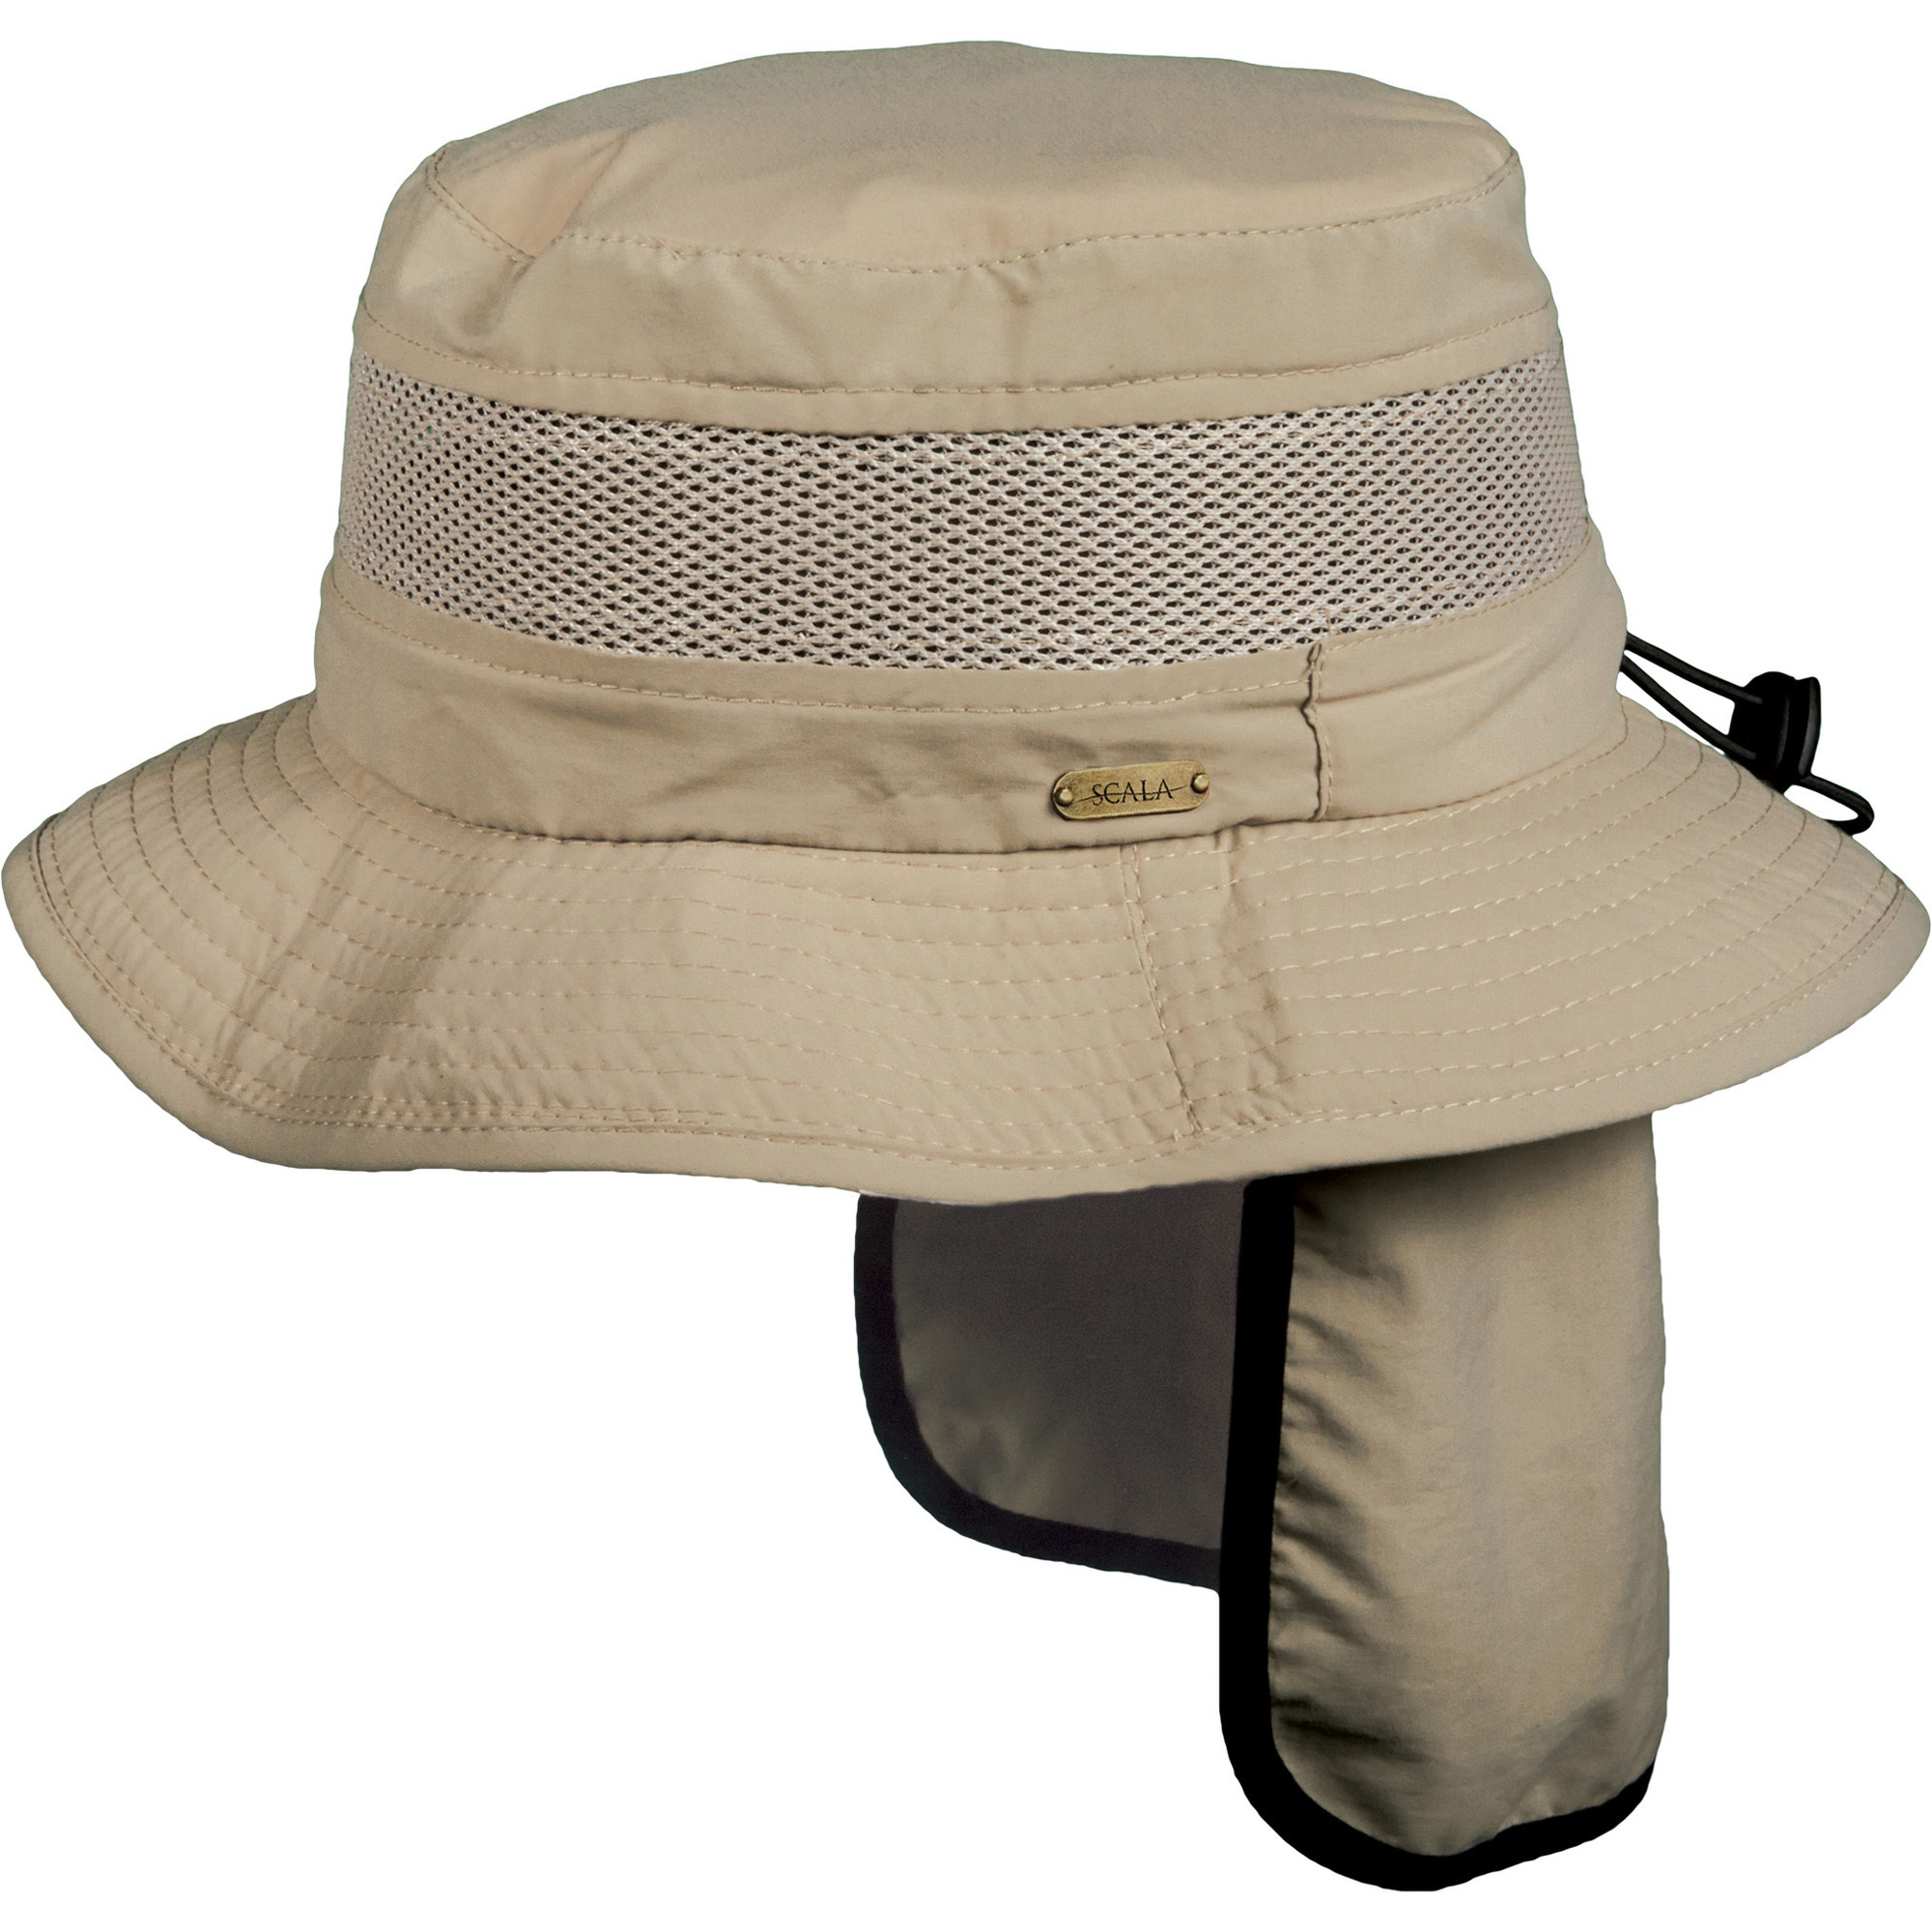 Dorfman Pacific, No Fly Zone Nylon Bug Repellent Hat, Size M, Color KHAKI, Hat Style Hat, Model NT199-KAKI2